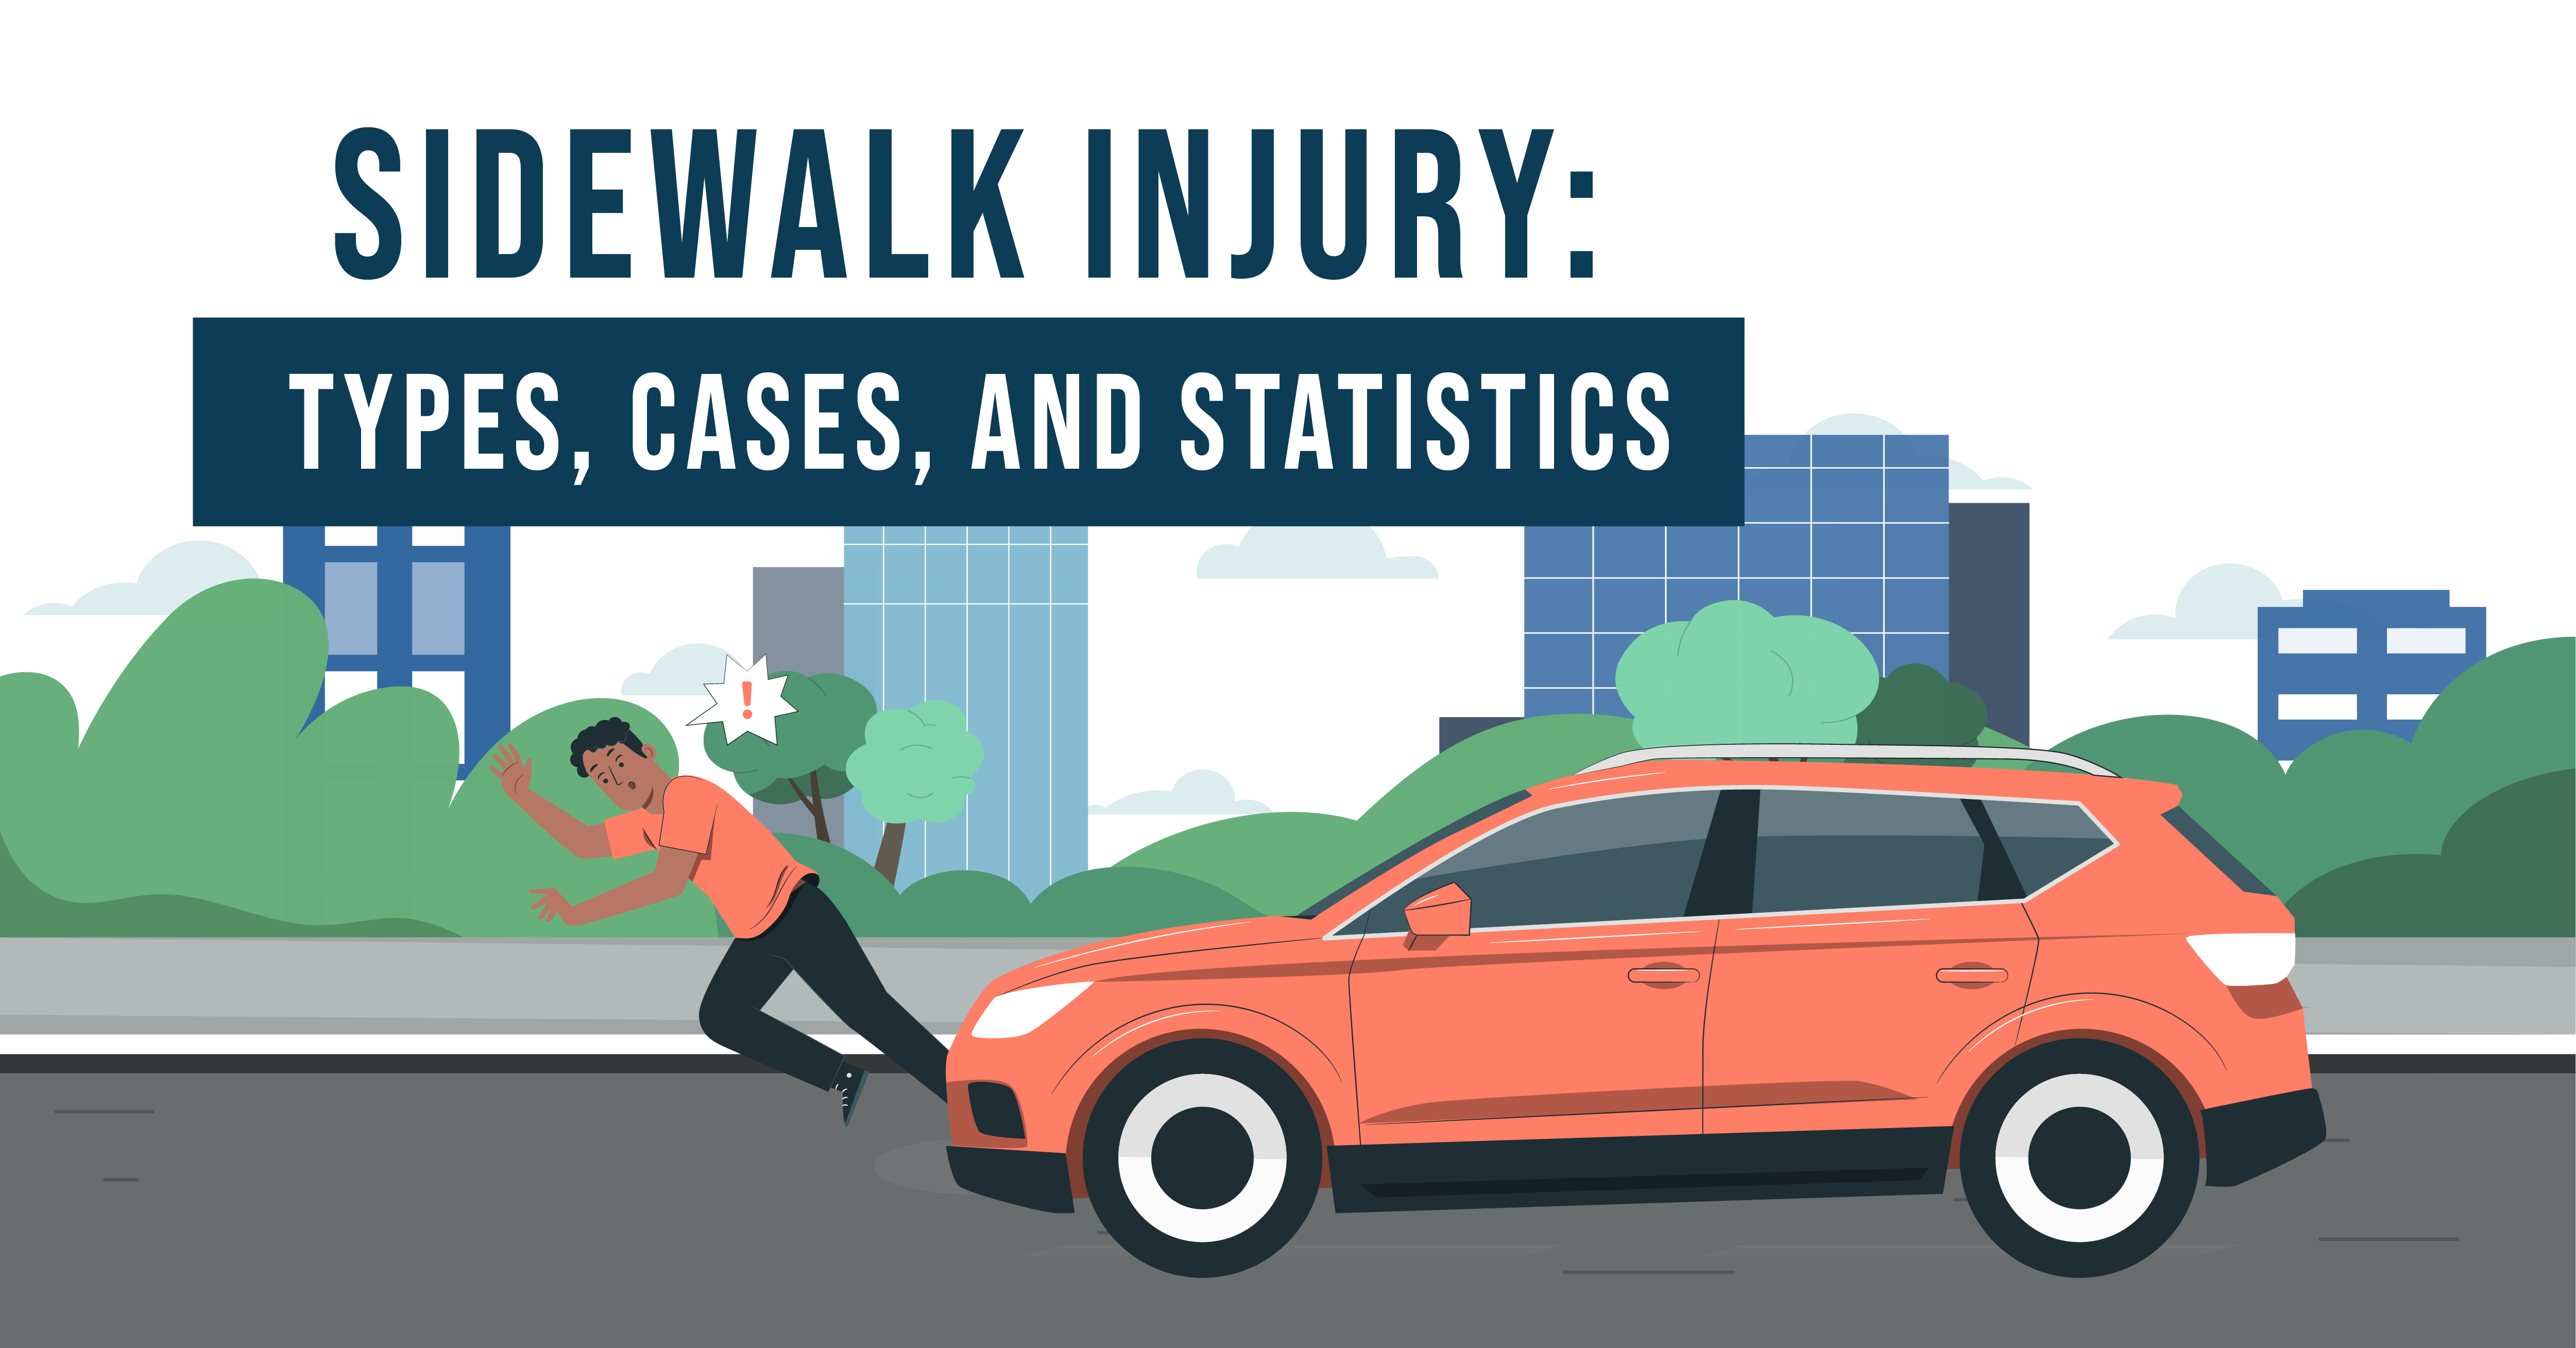 Sidewalk Injury Types, Cases, and Statistics